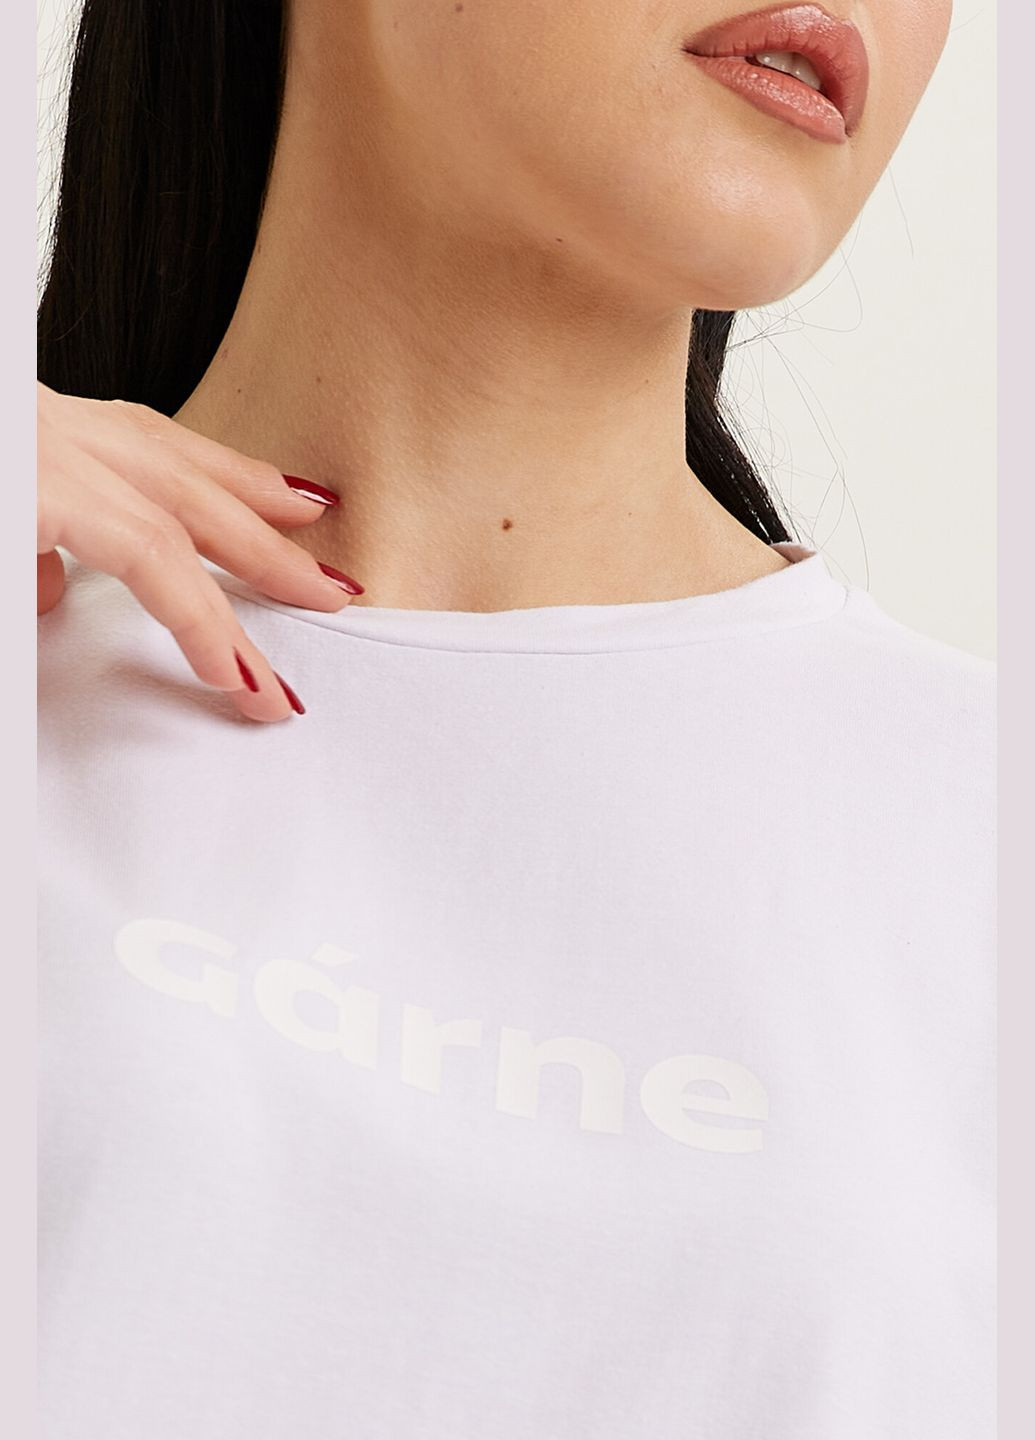 Белая летняя оверсайз футболка Garne